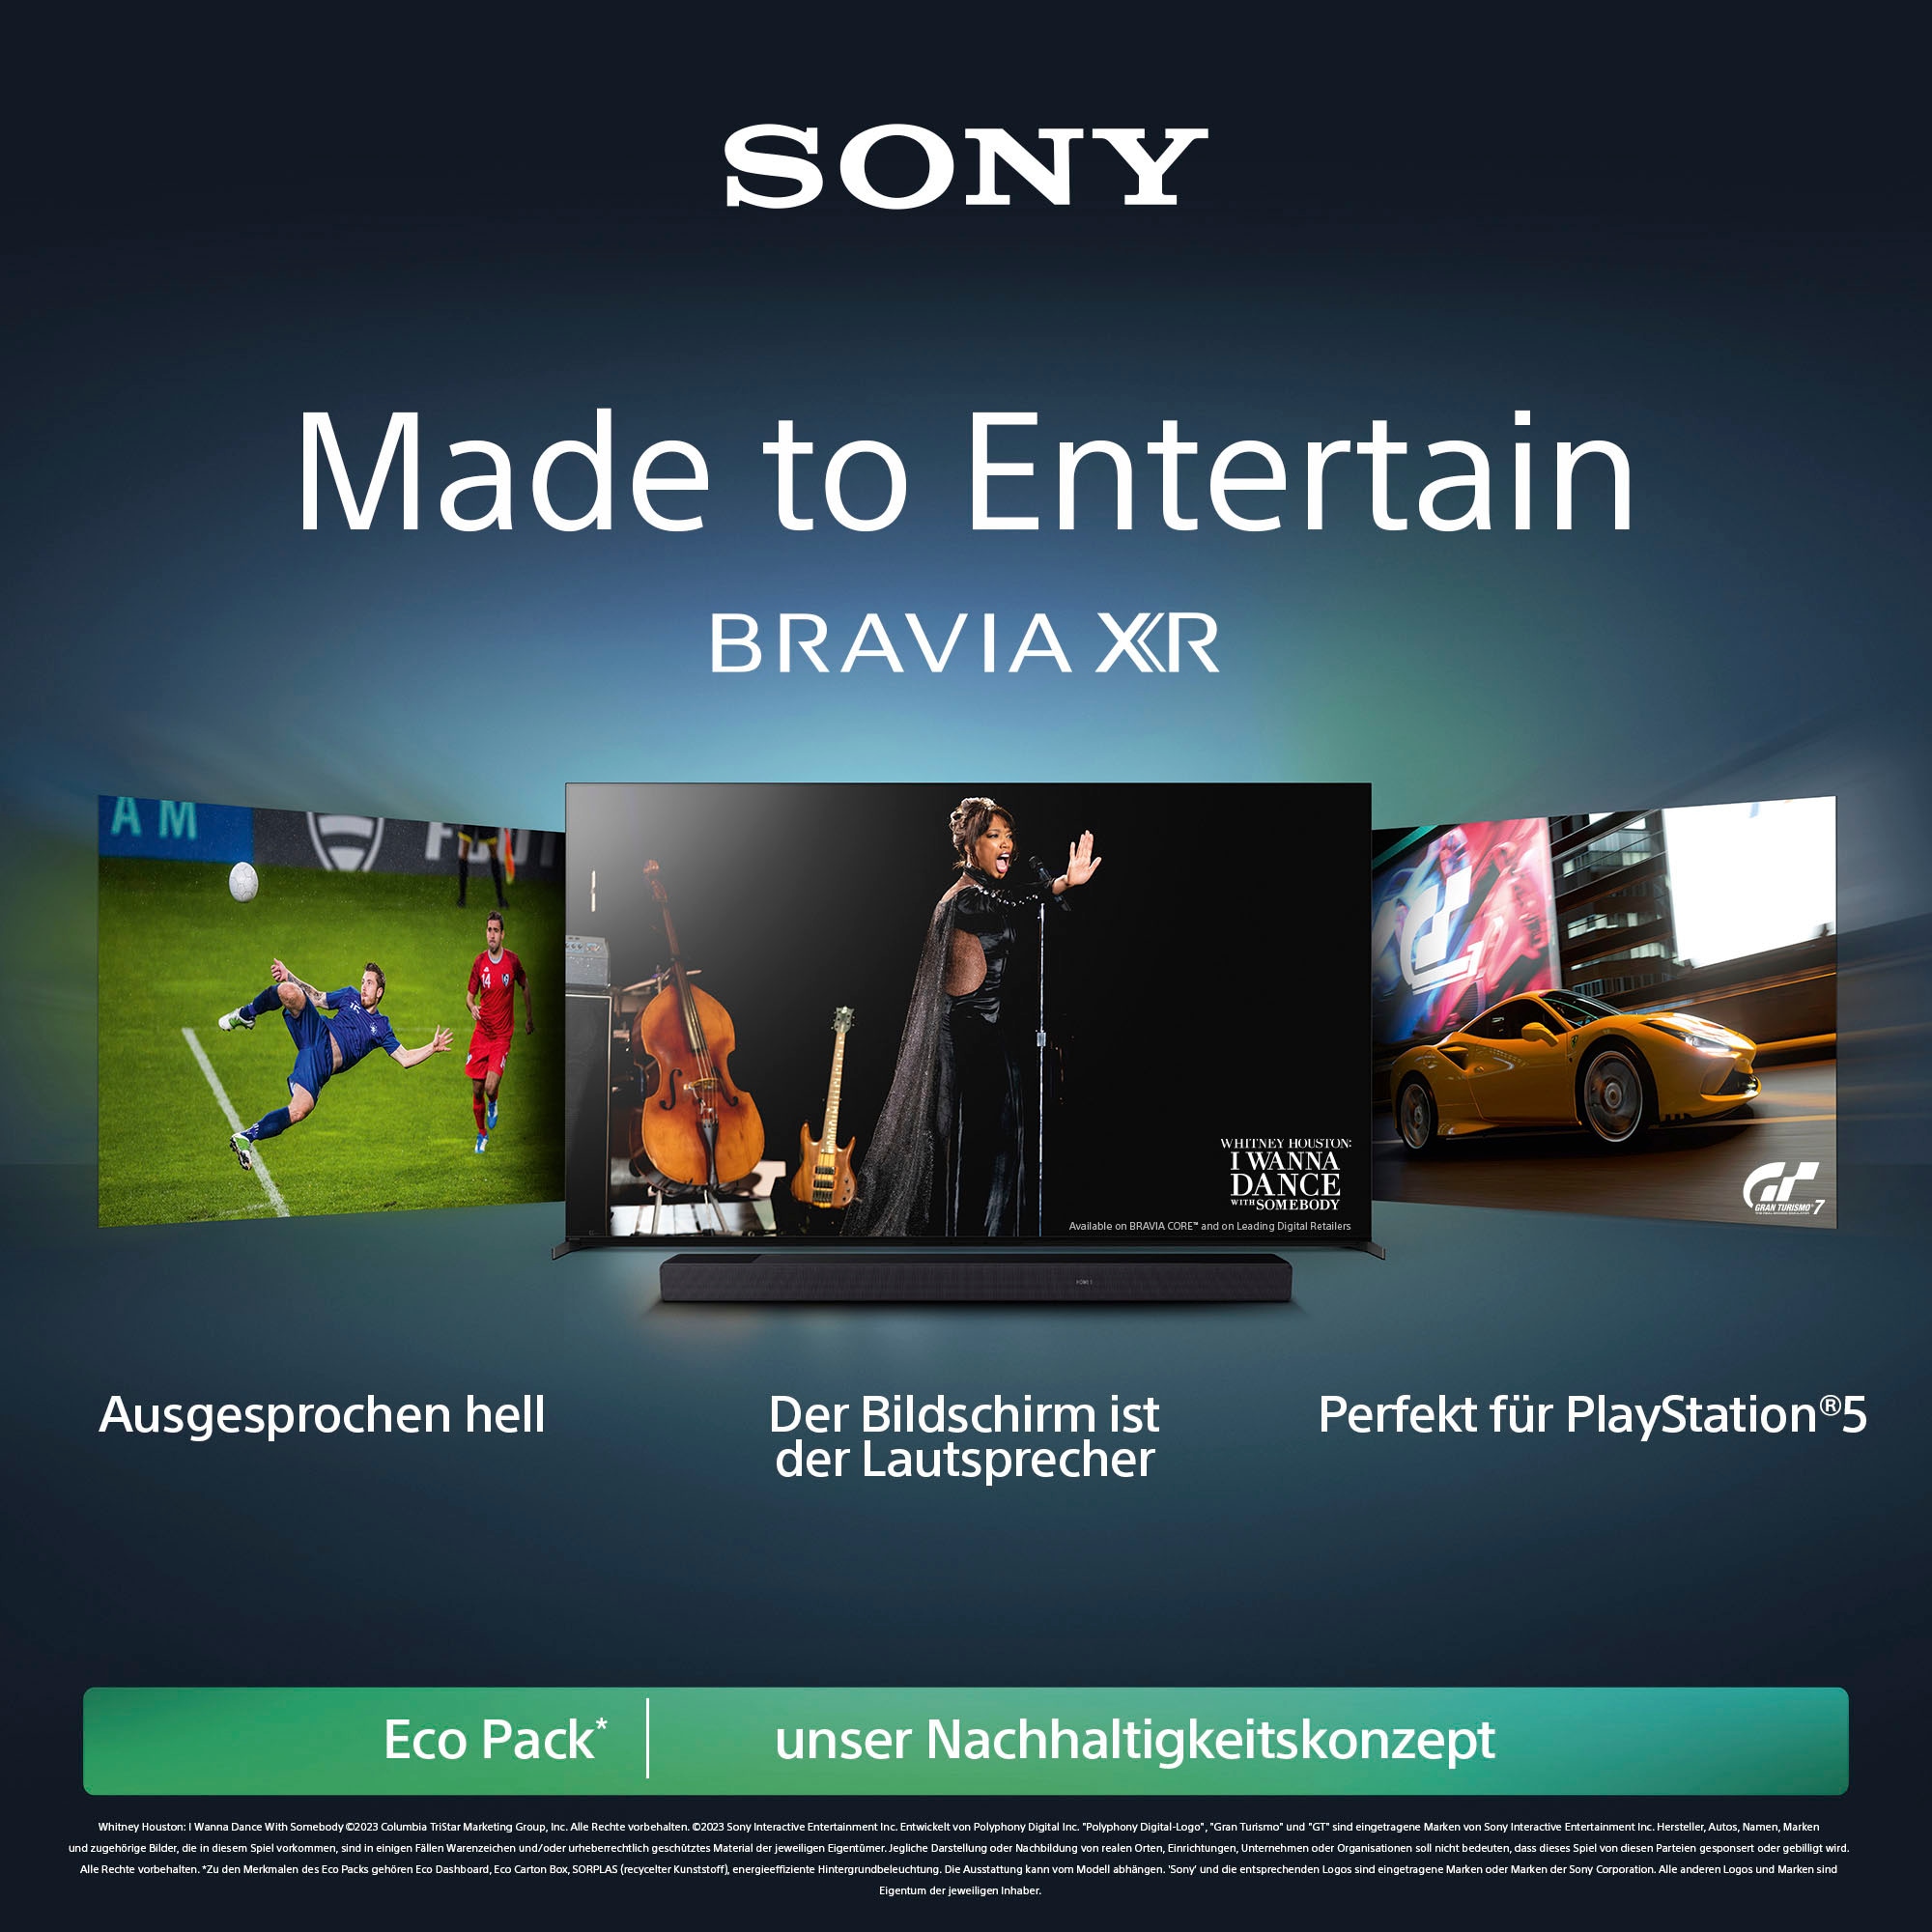 TV SONY Bravia XR 75X95L (LED - 75'' - 189 cm - 4K Ultra HD - Smart TV)